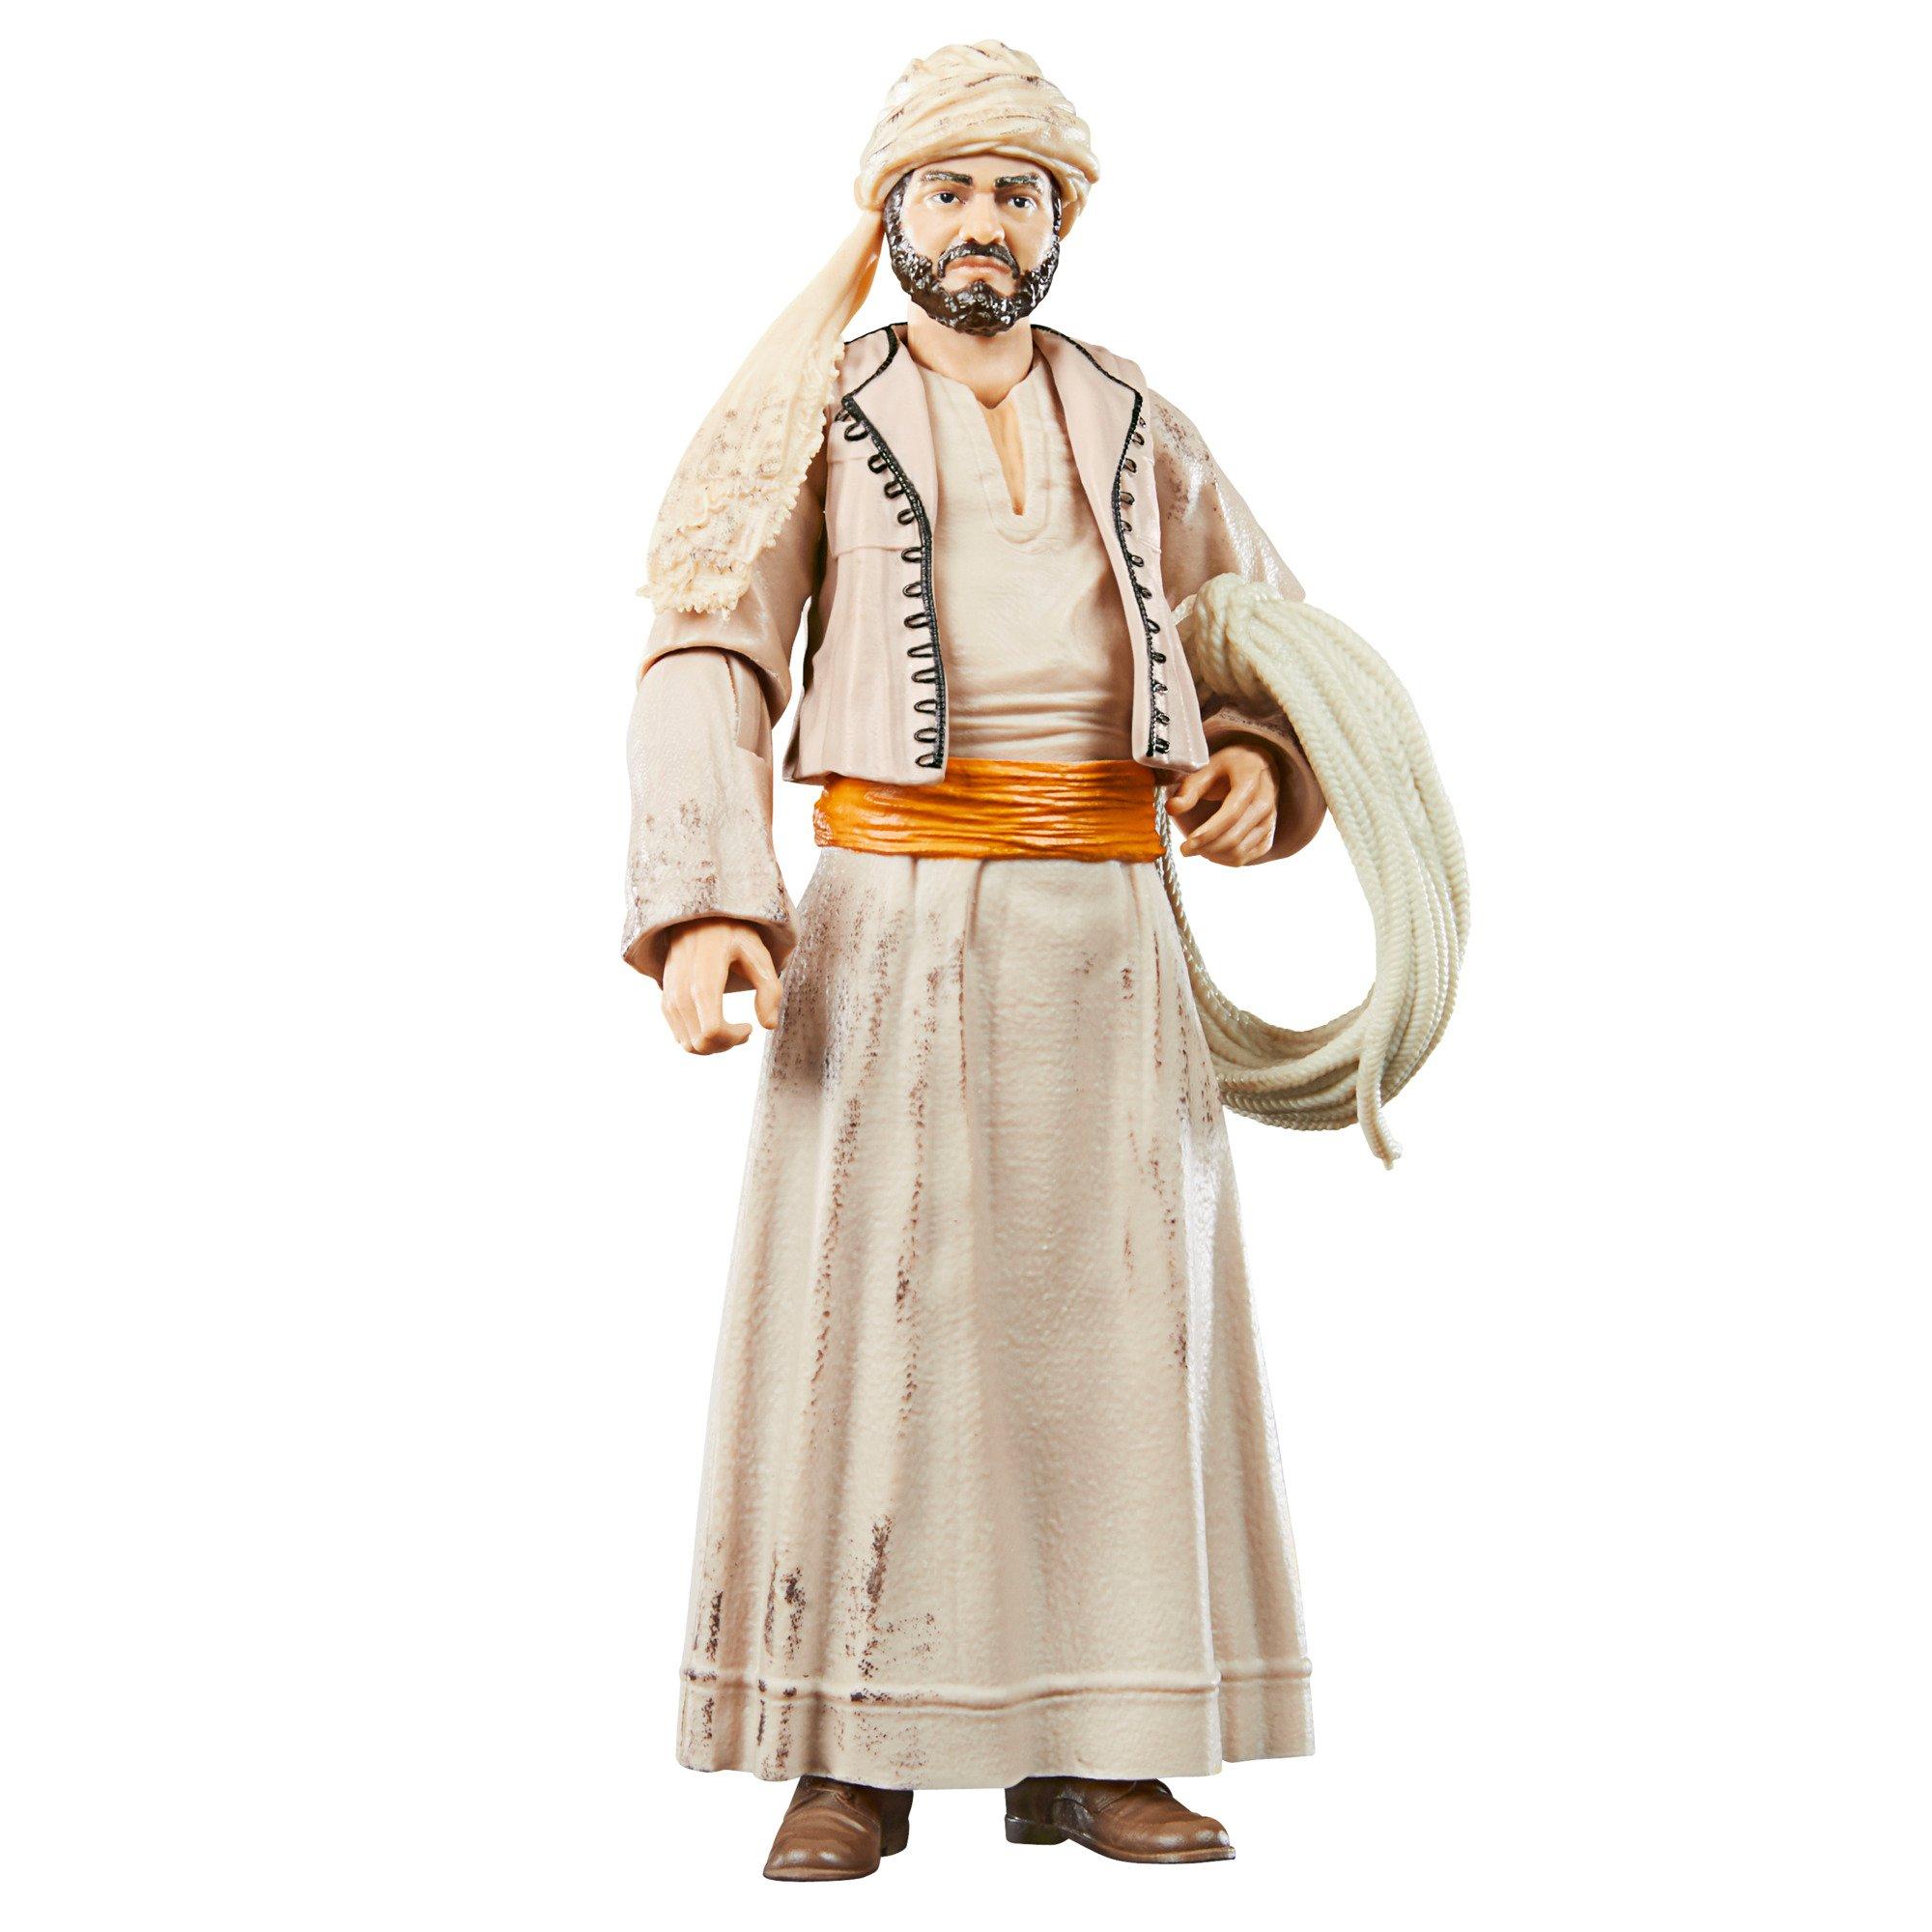 Hasbro Indiana Jones Adventure Series Sallah (Build an Artifact) 6-in Action Figure